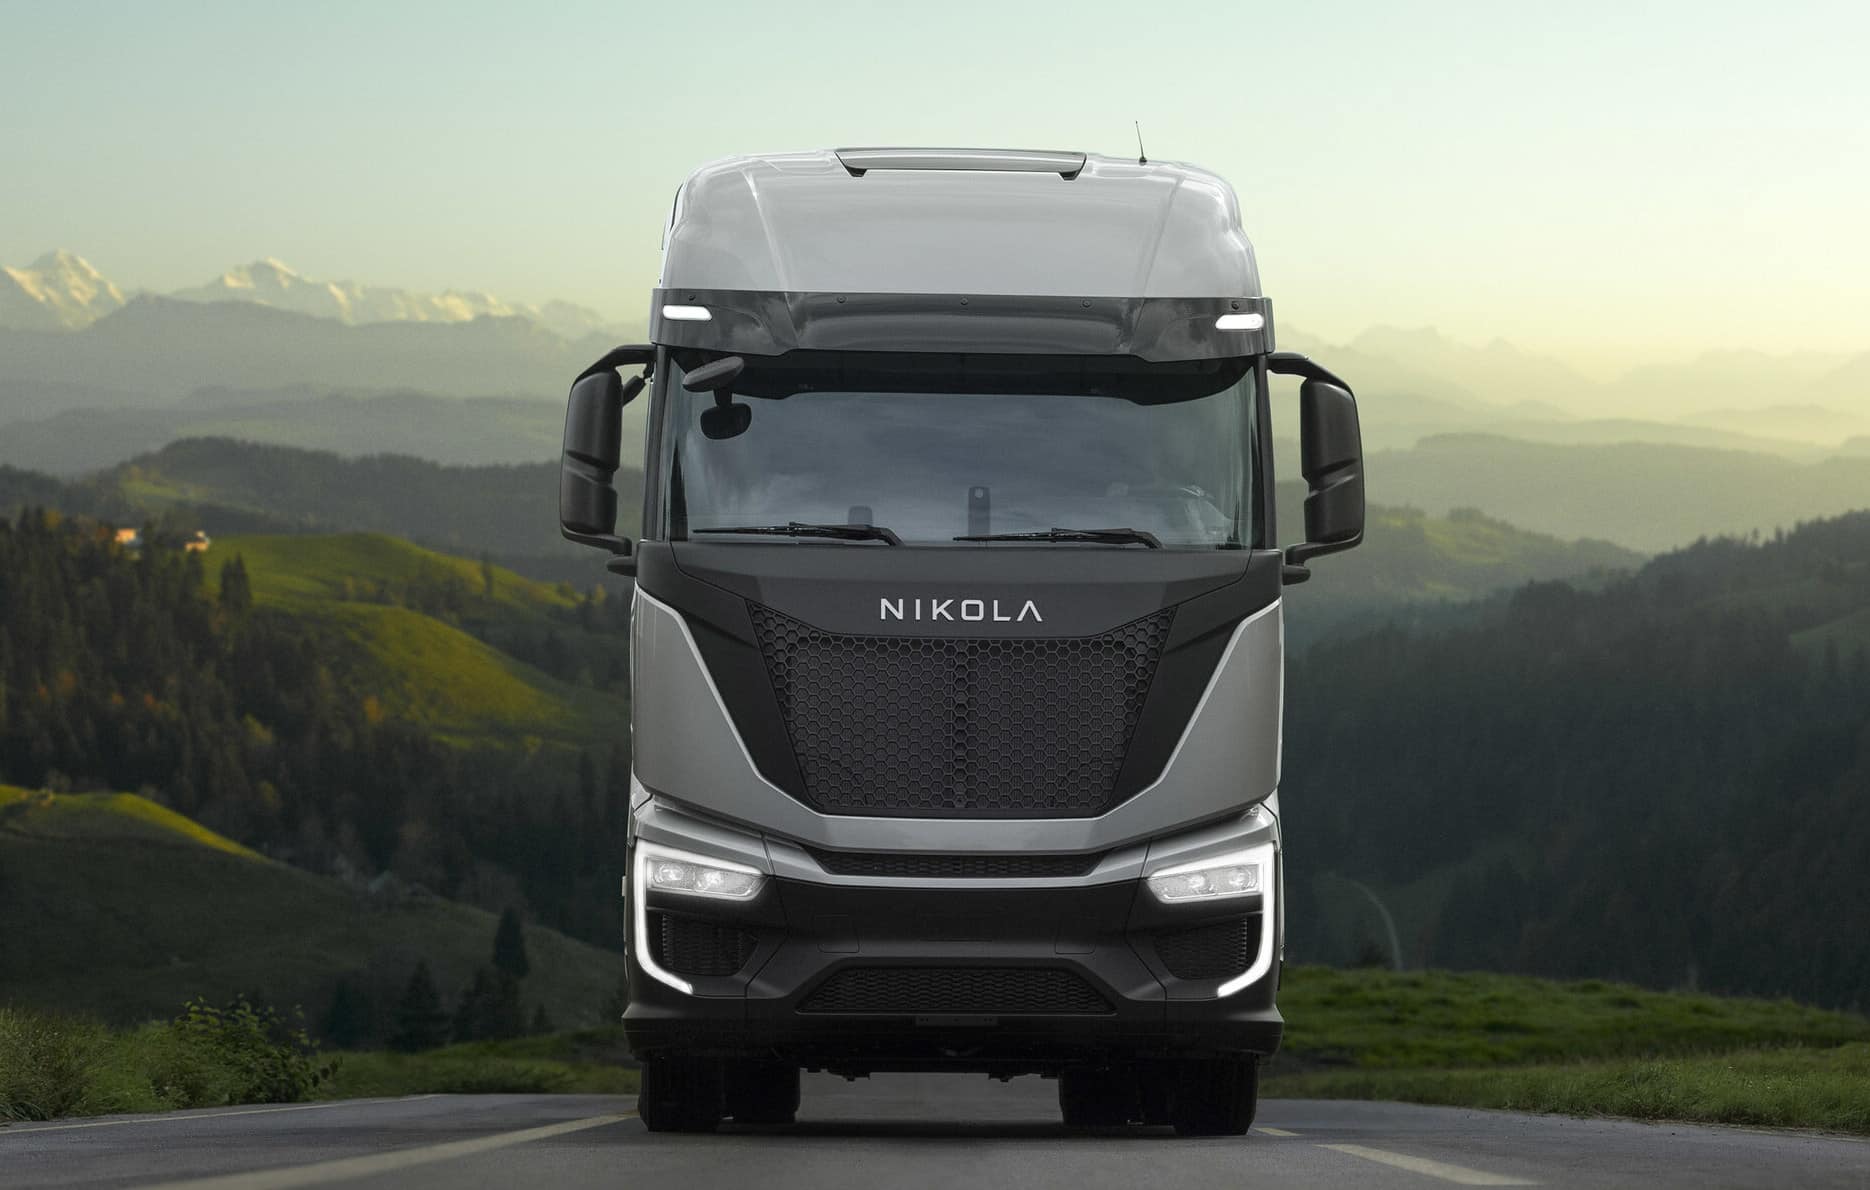 Iveco and Nikola Refocus Partnership to Accelerate Zero-Emission Heavy-Duty Truck Development